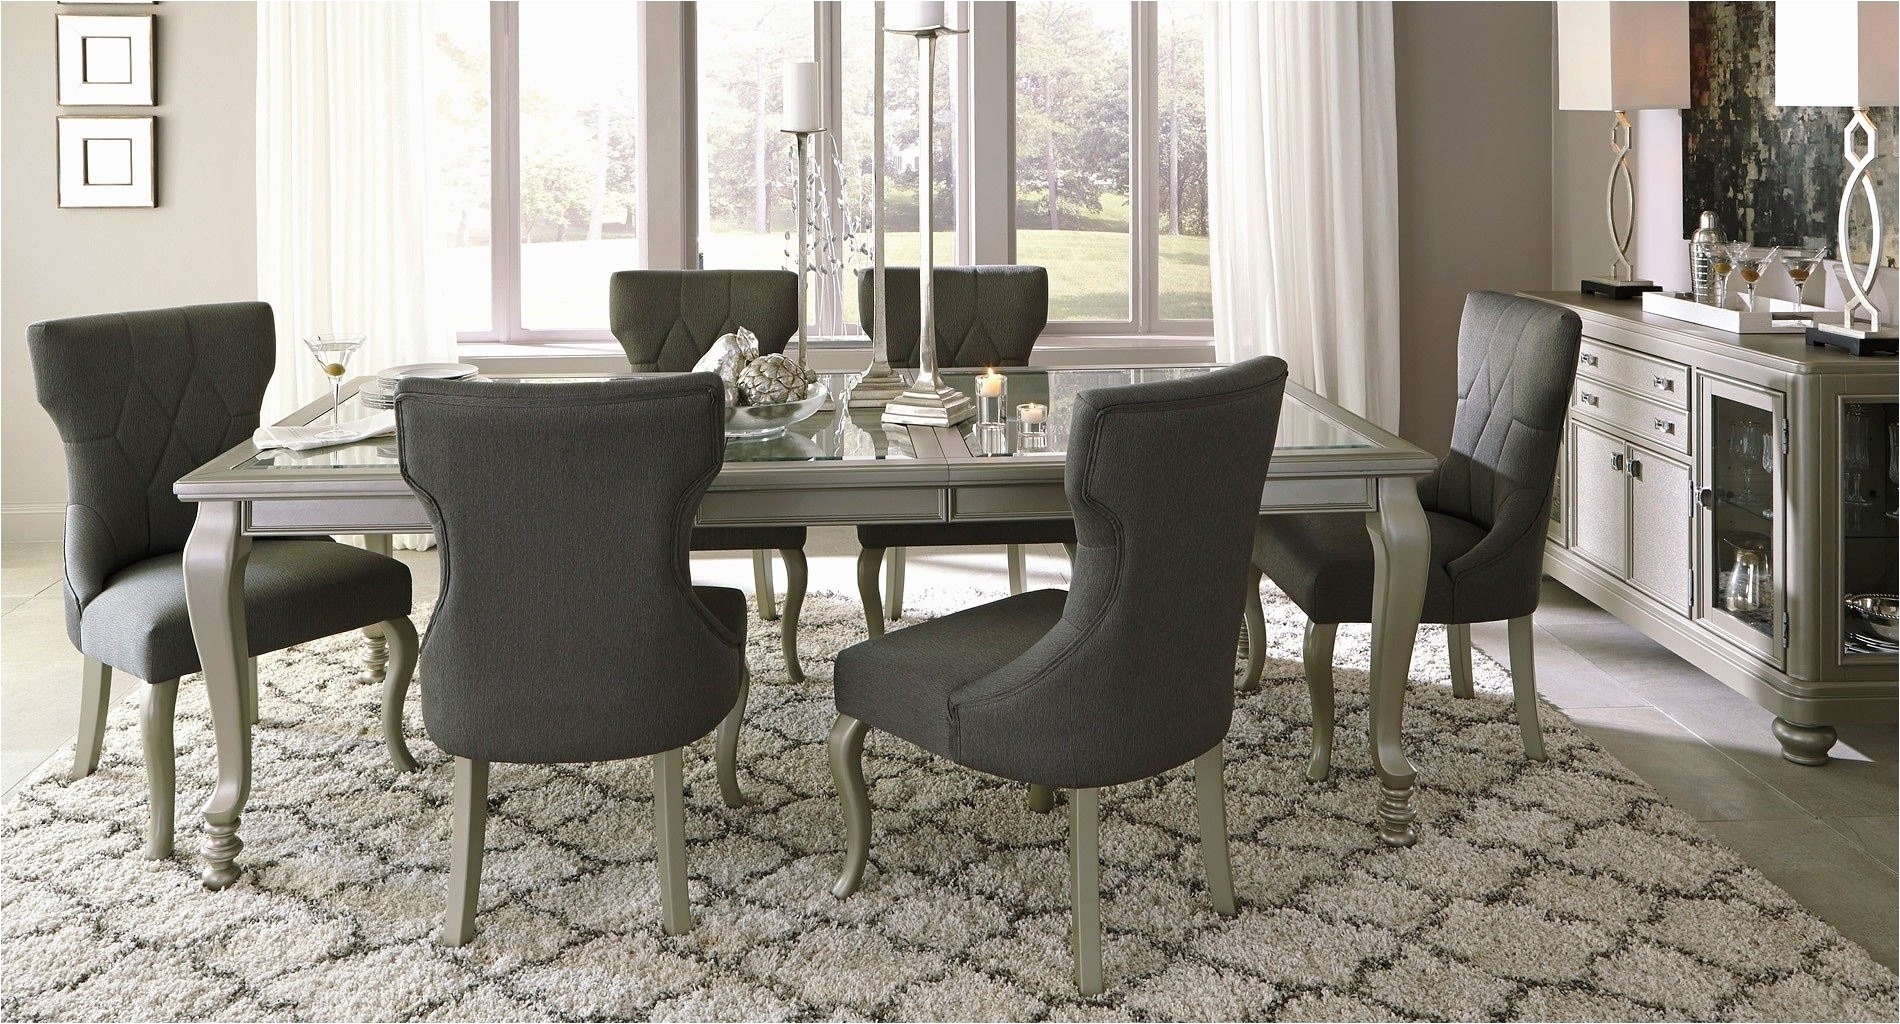 living room furniture sale elegant dining room sets for sale brilliant shaker chairs 0d archives